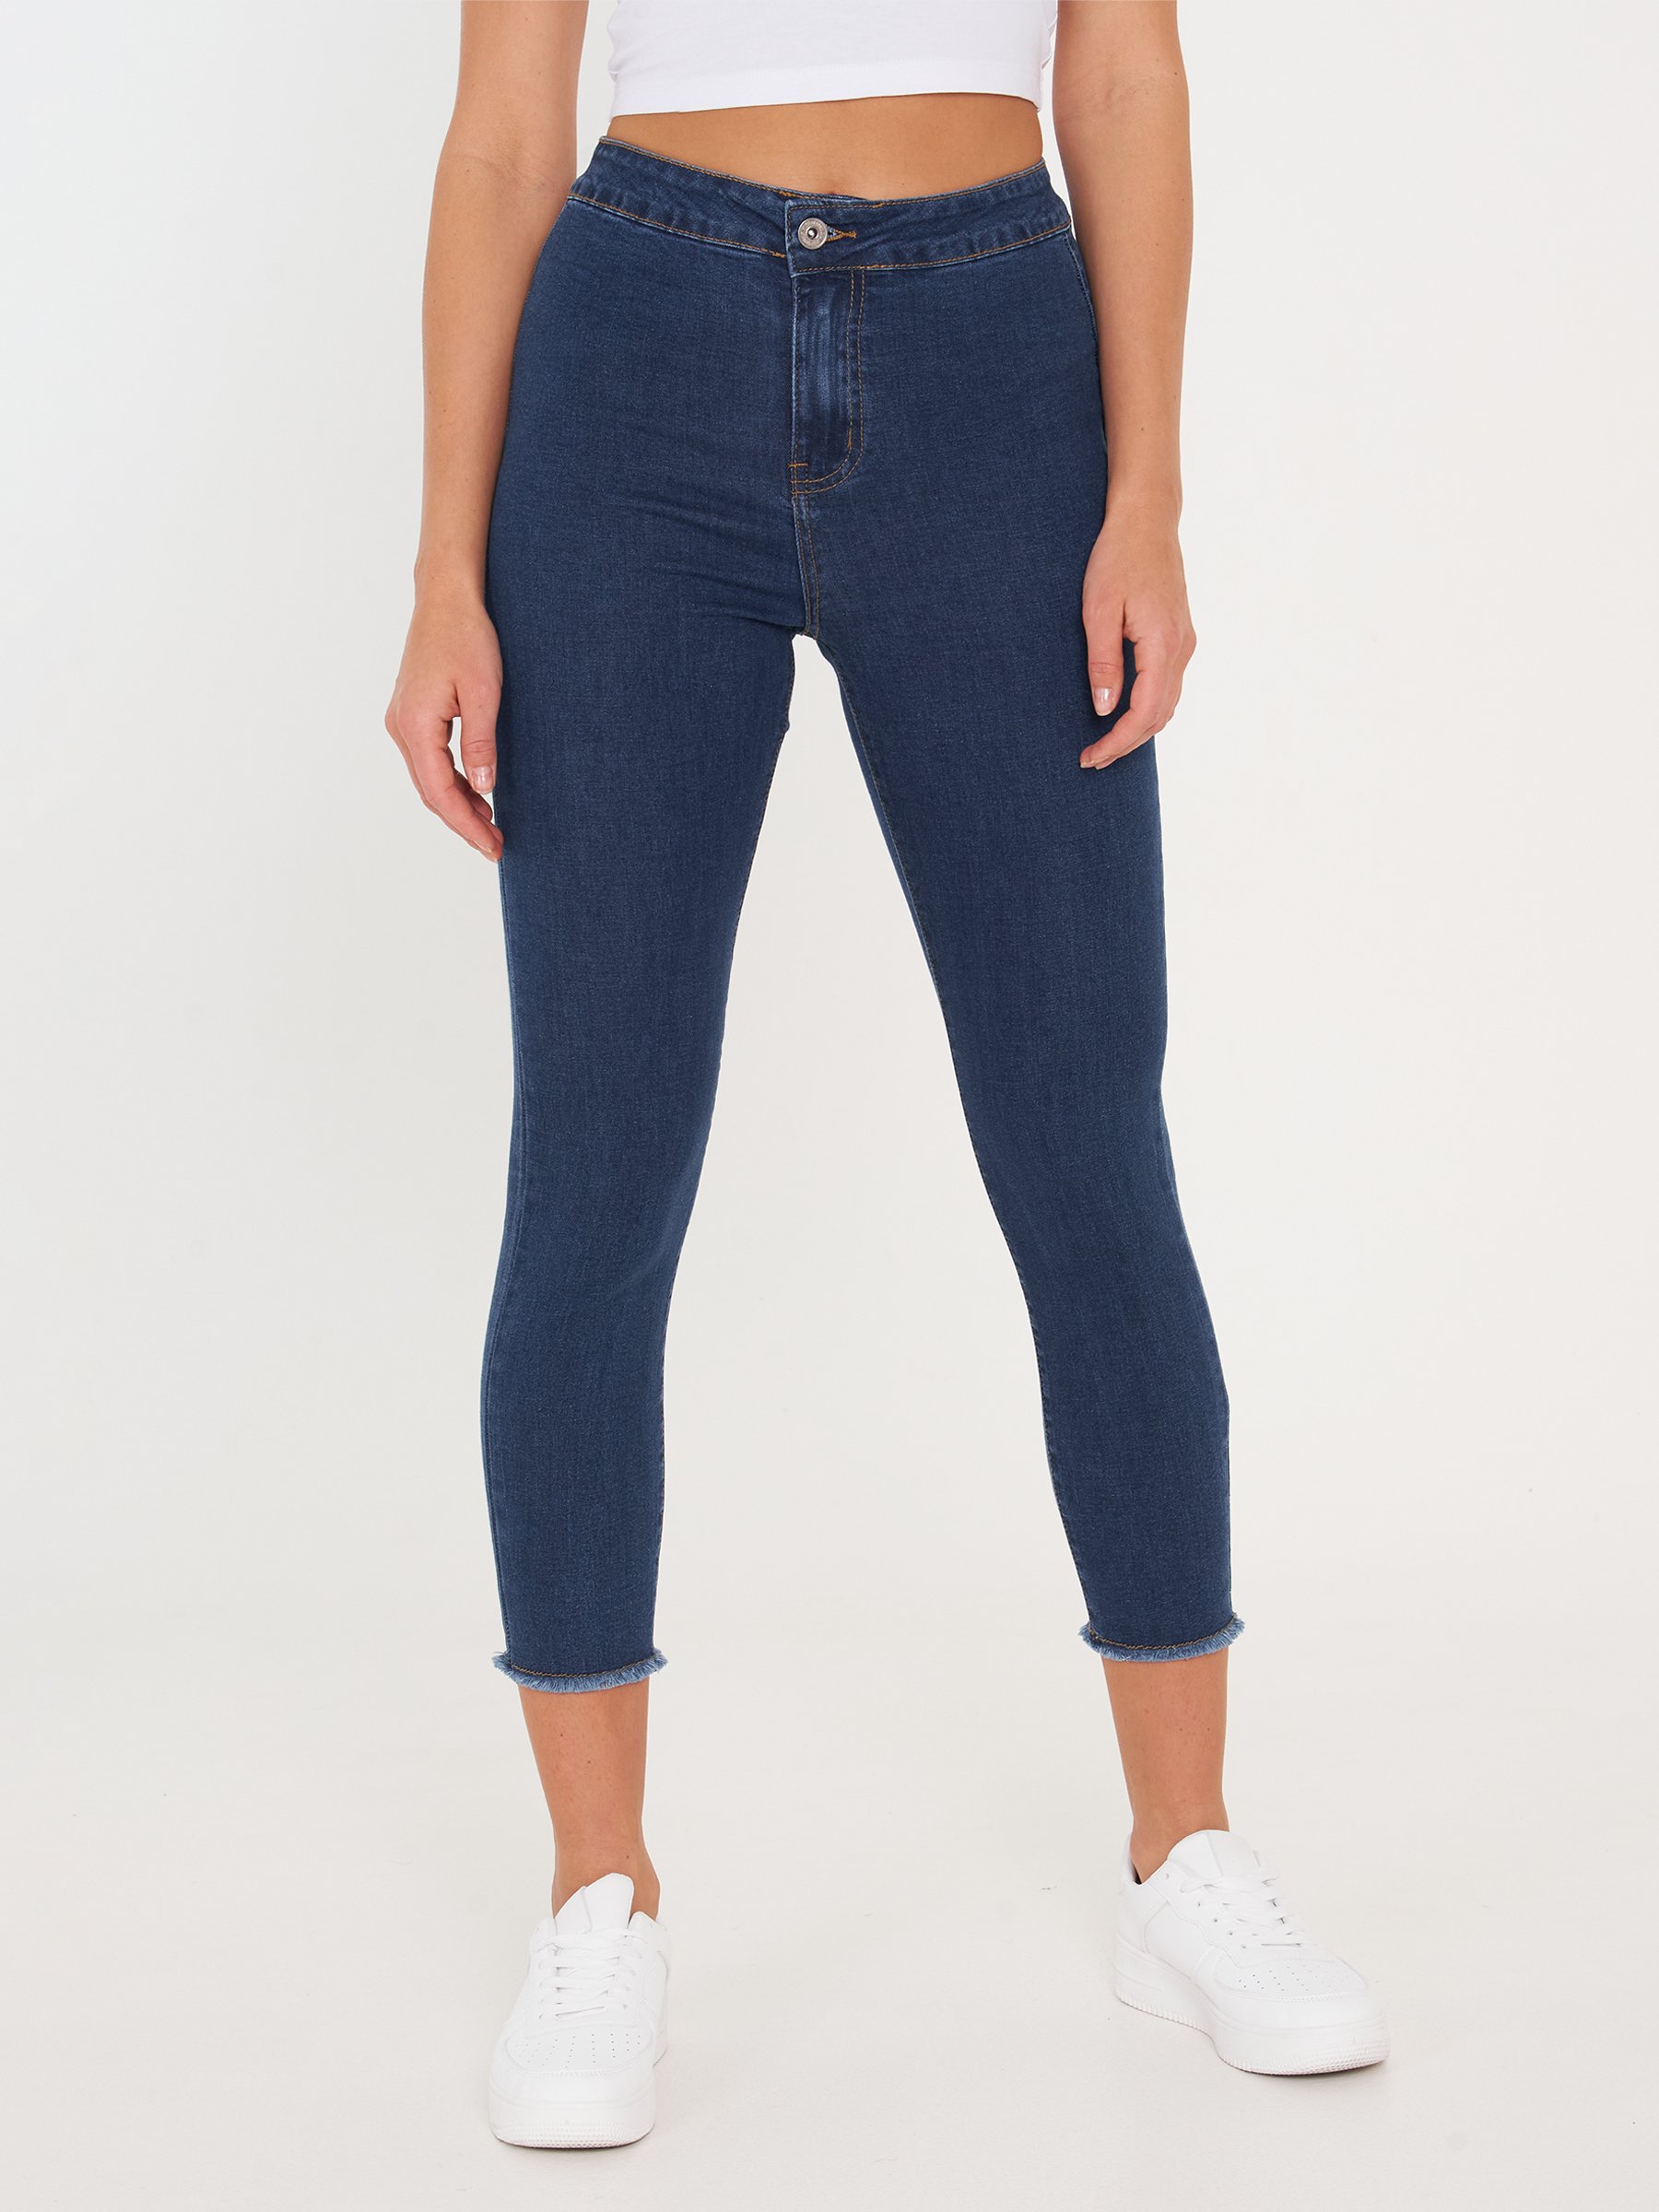 Fashion Jeans 7/8 Length Jeans Asos 7\/8 Length Jeans steel blue 